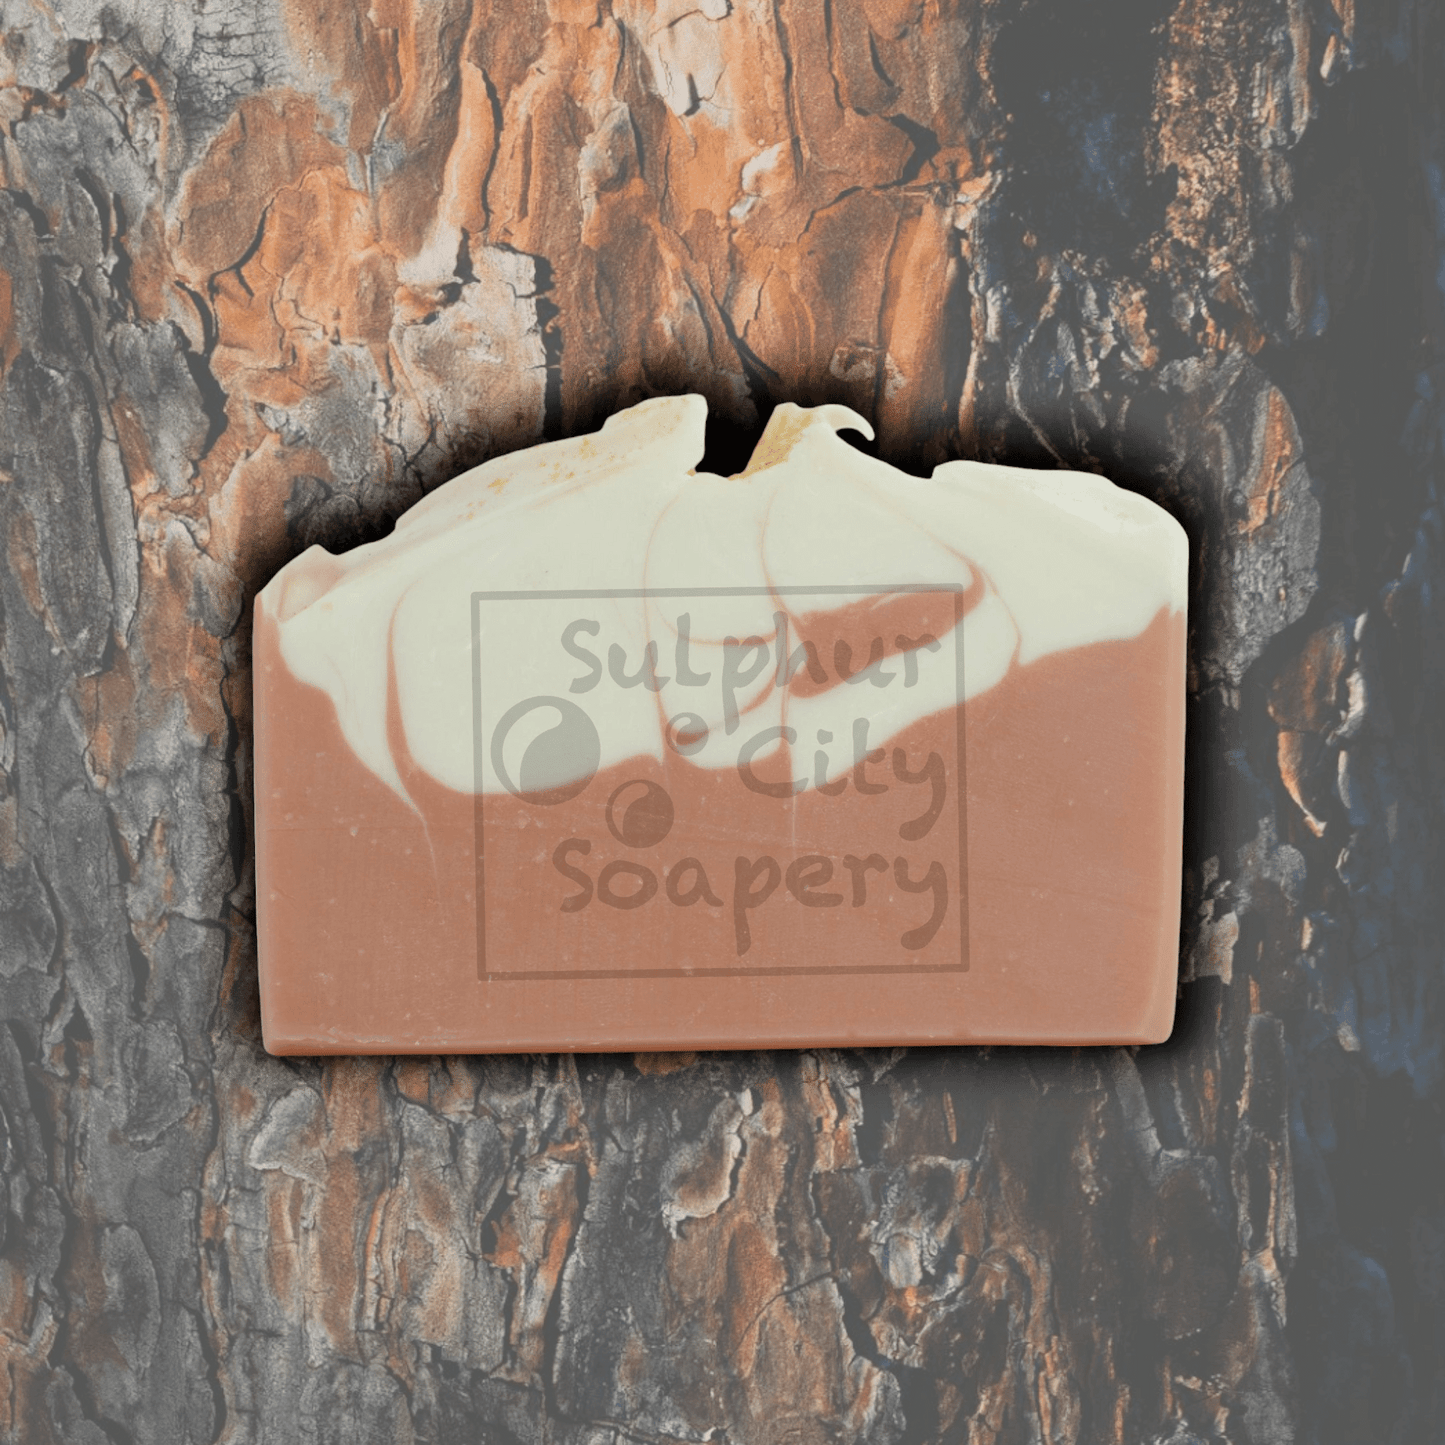 Sulphur City Soapery soap Sandalwood scented soap.